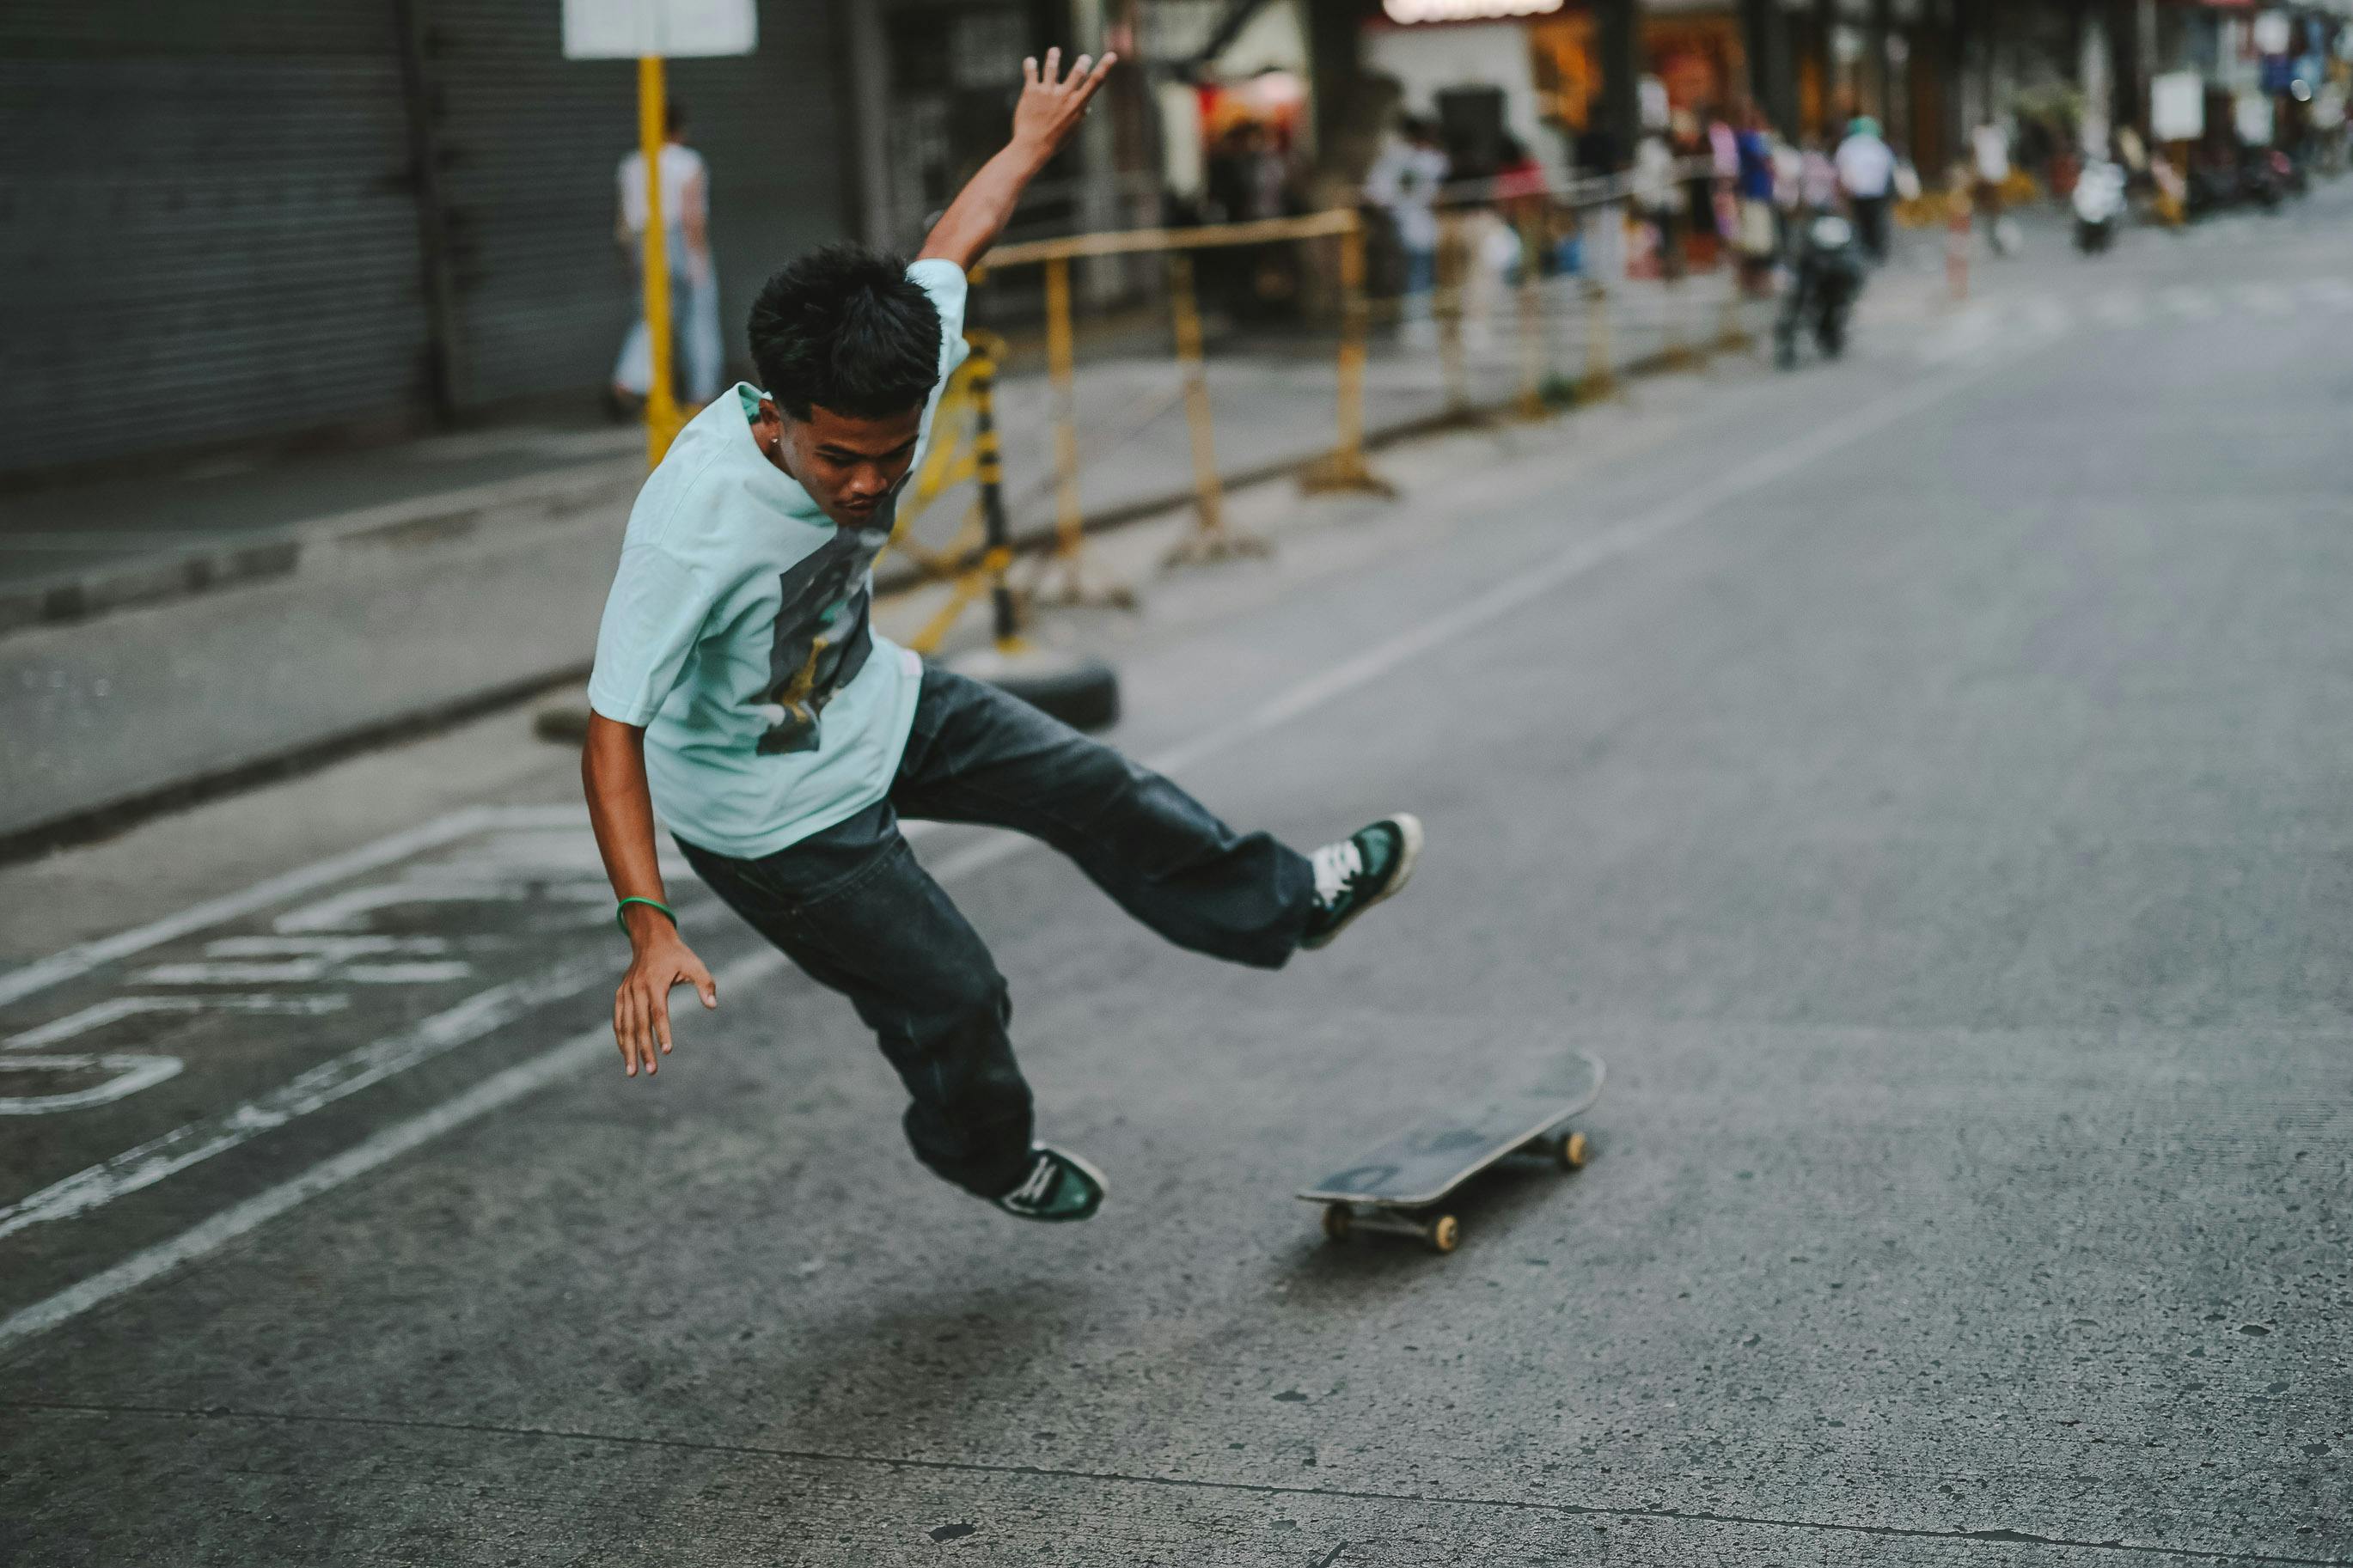 Boy Falling Off Skateboard · Free Stock Photo